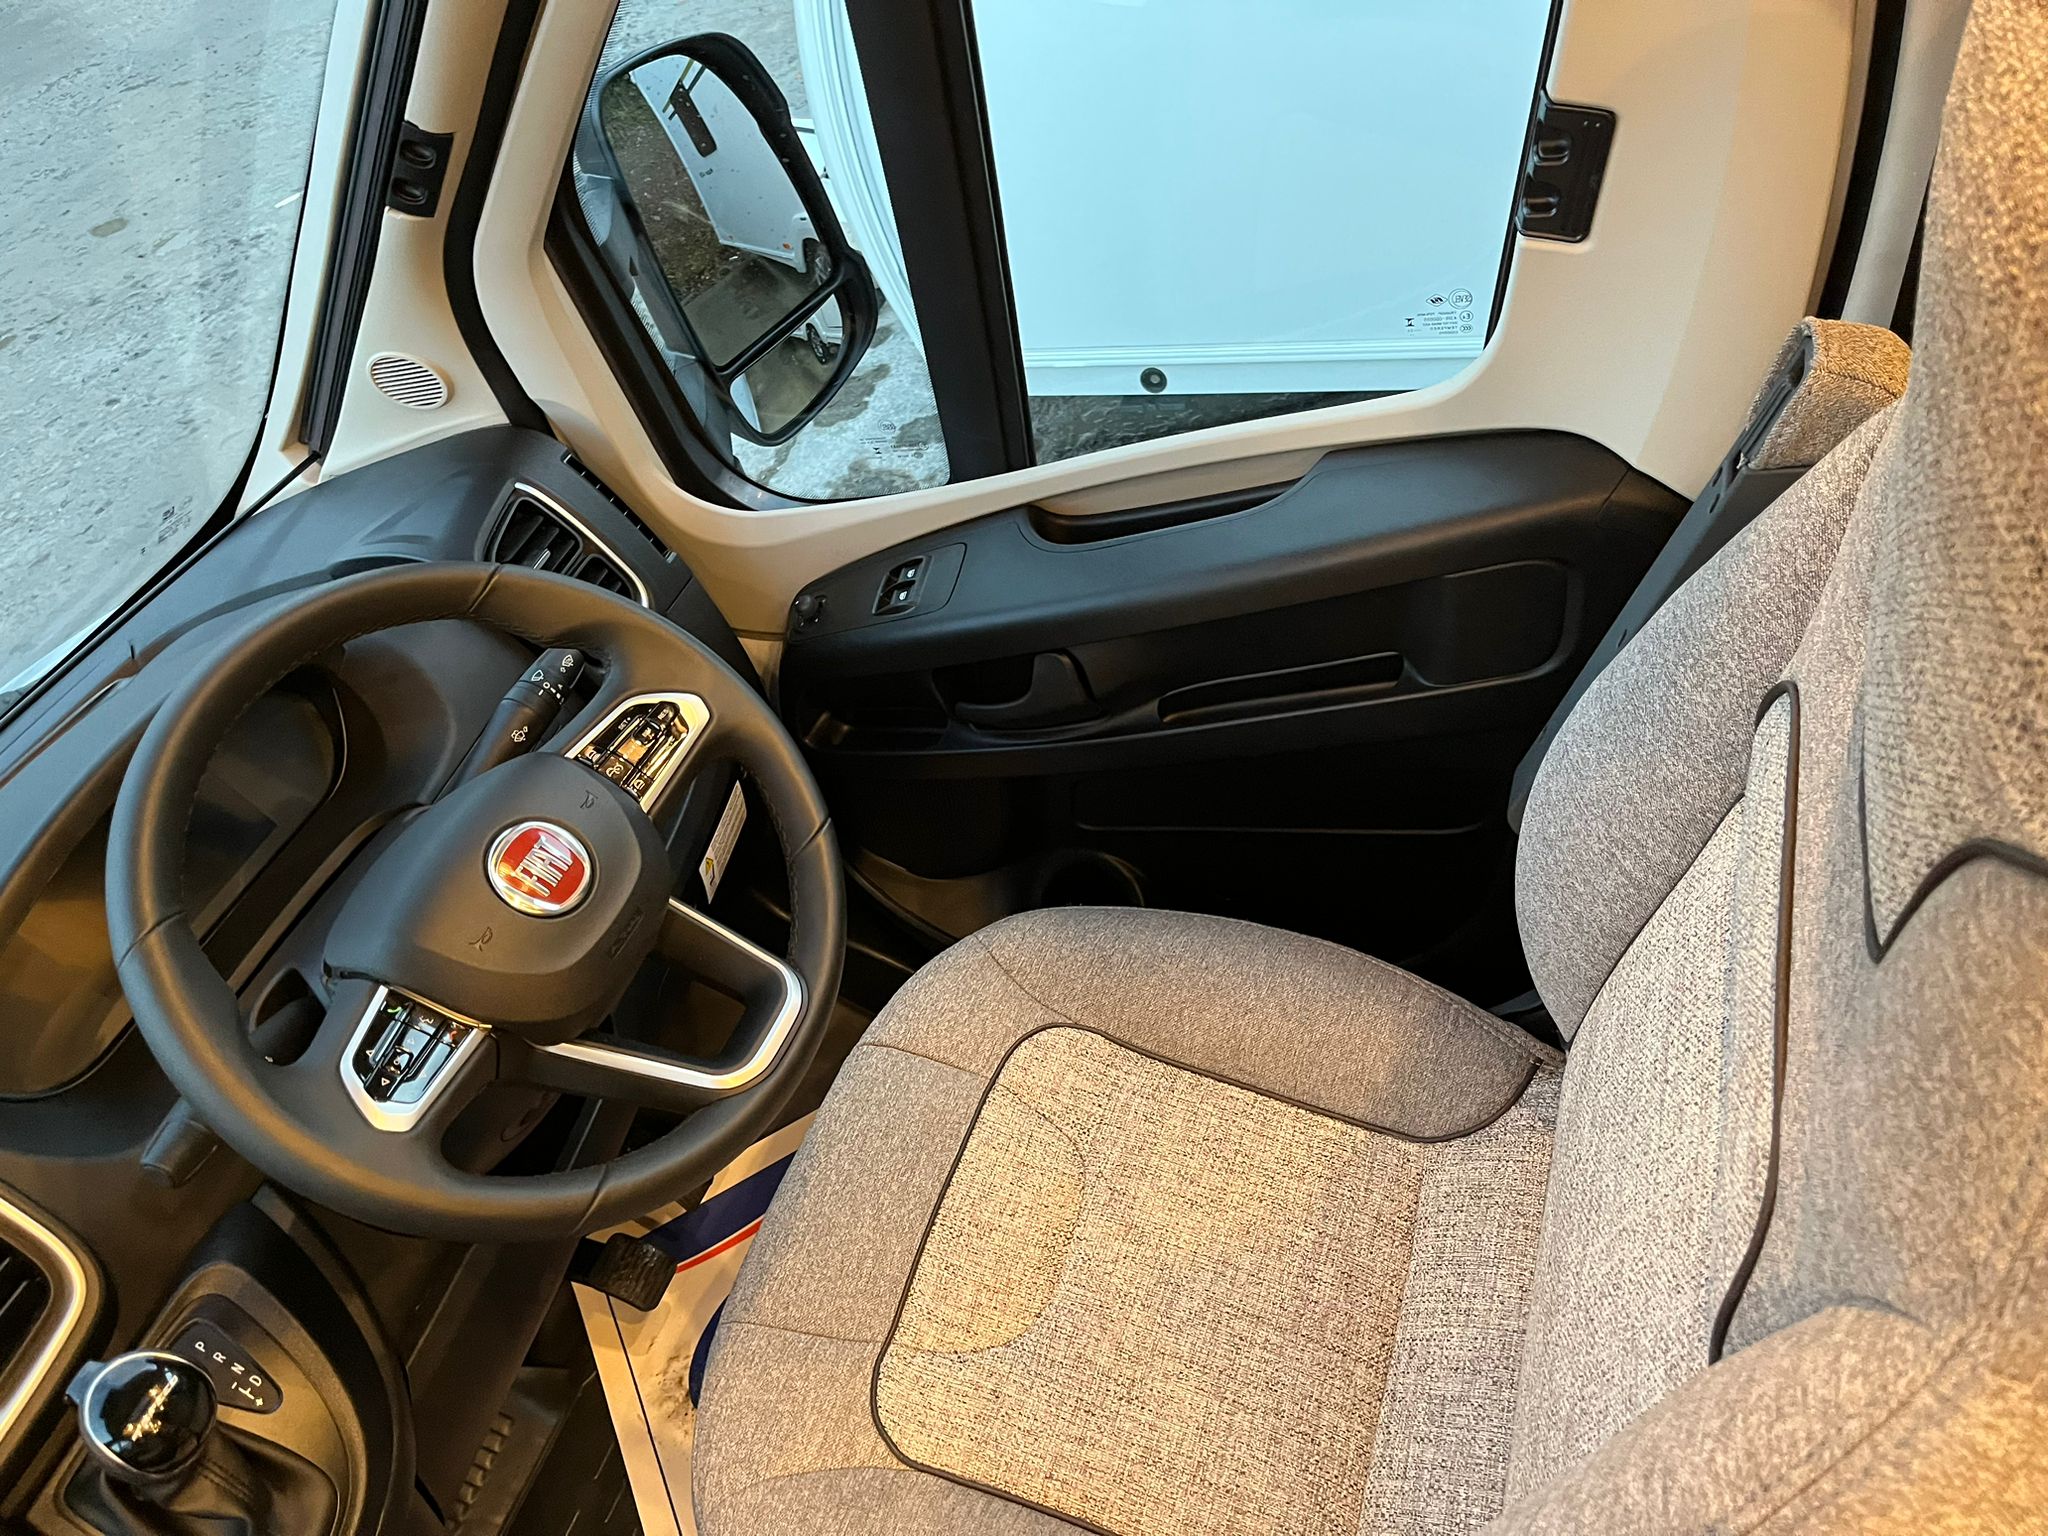 New Malibu Comfort Plus T460 LE - Automatic